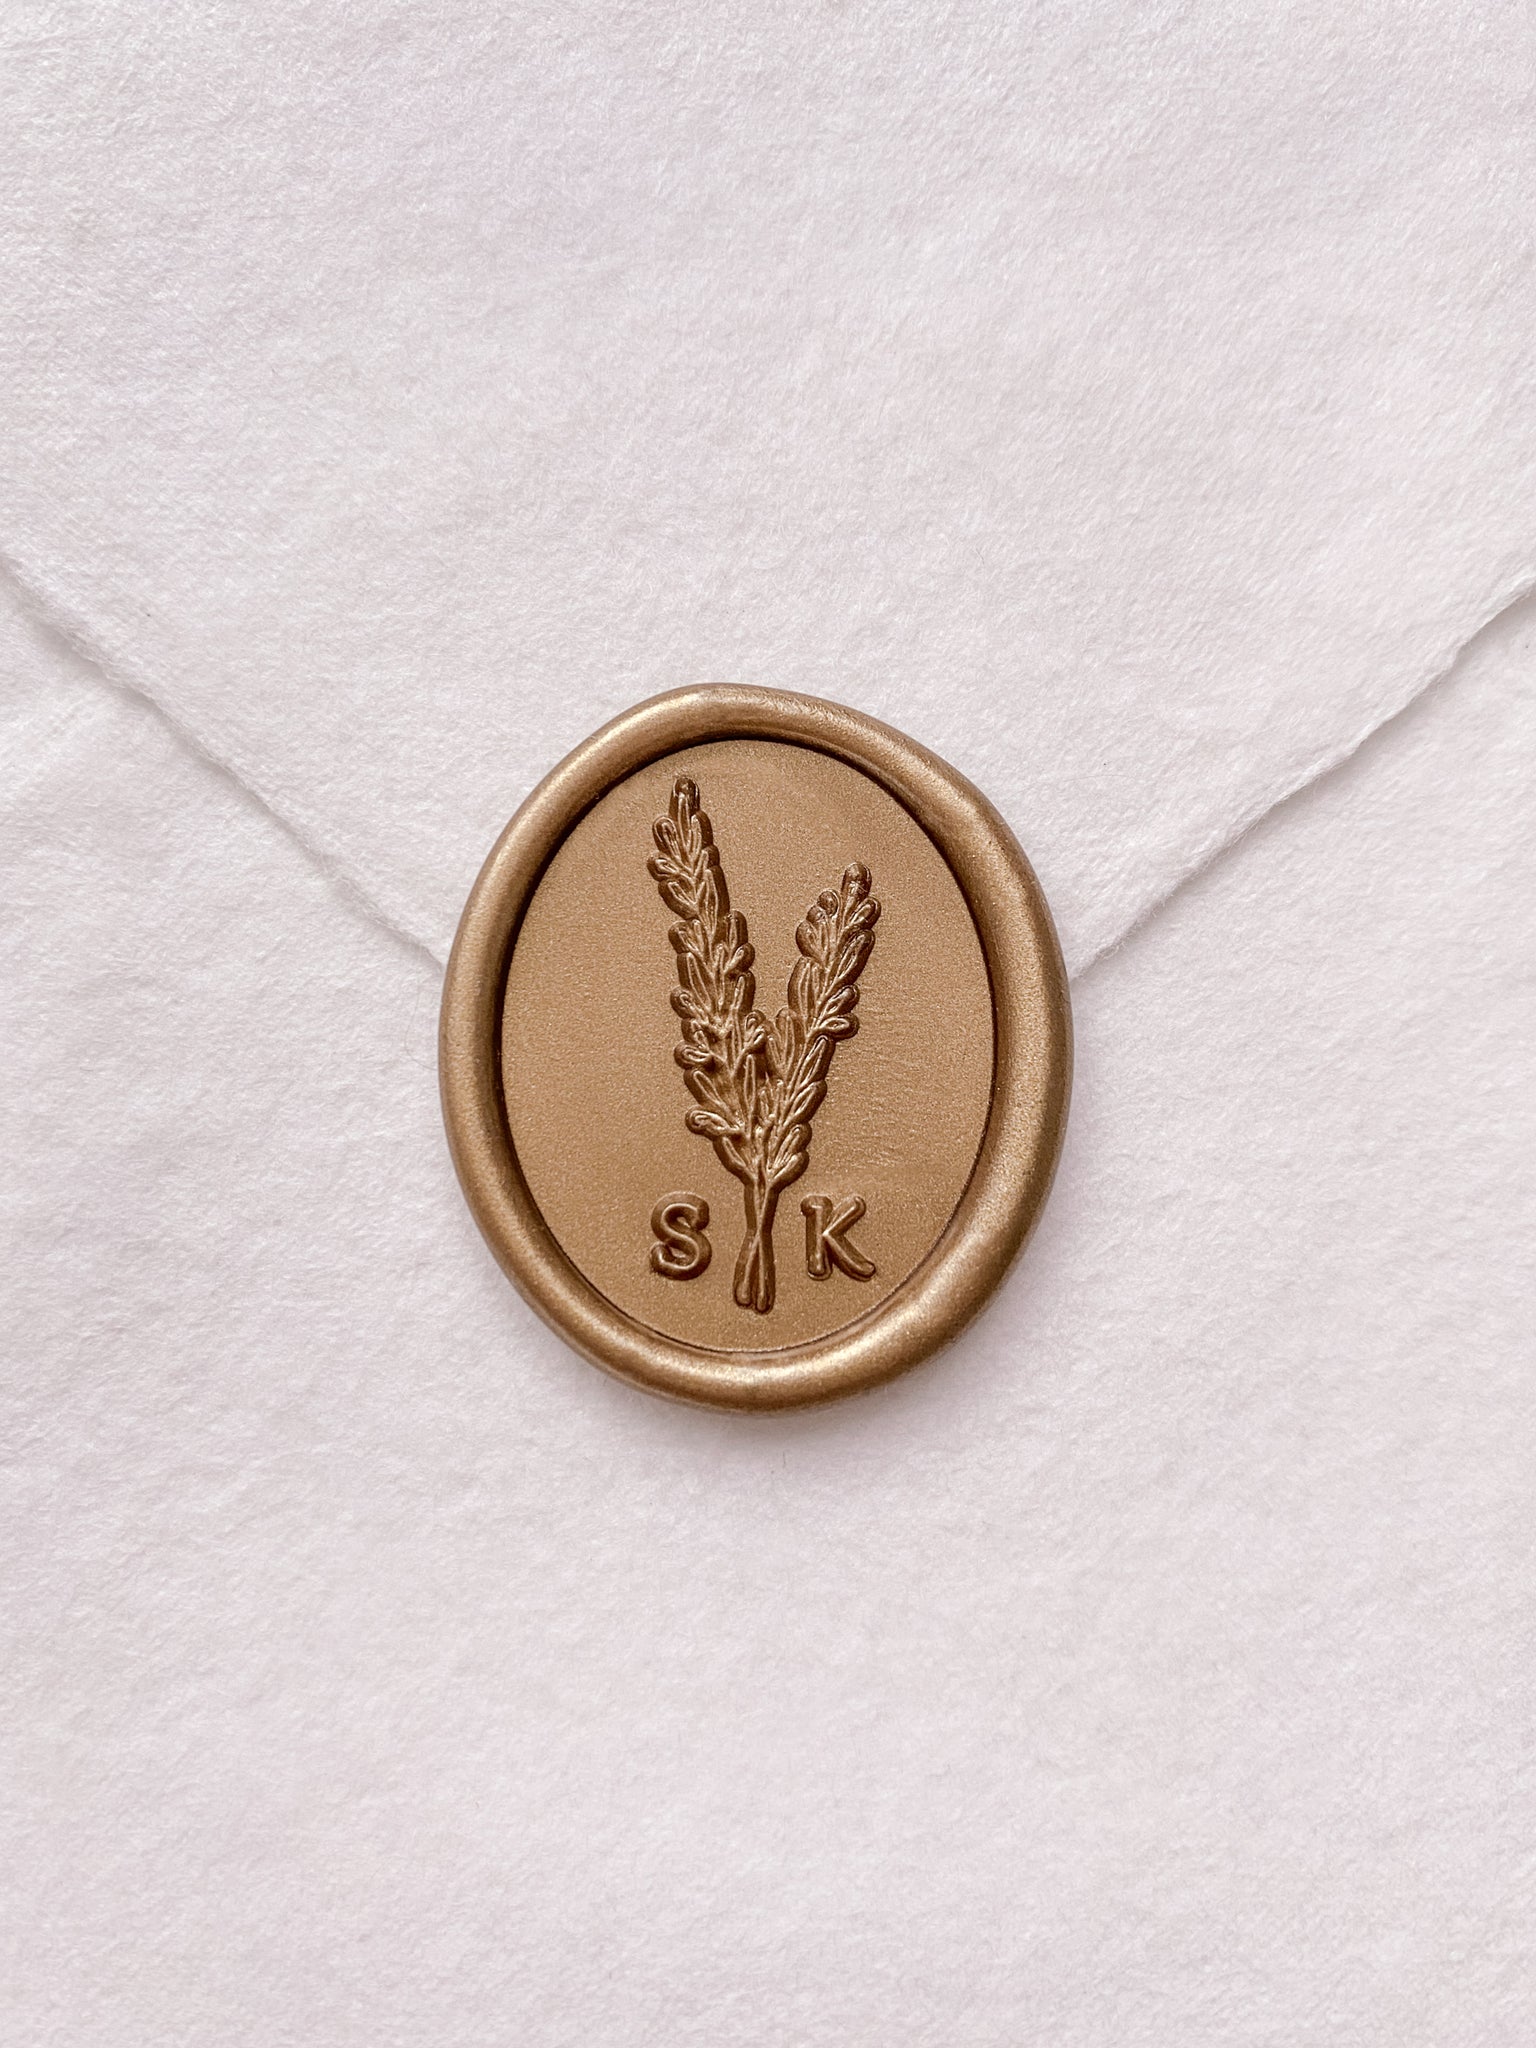 Rosemary leaf monogram wax seal in gold